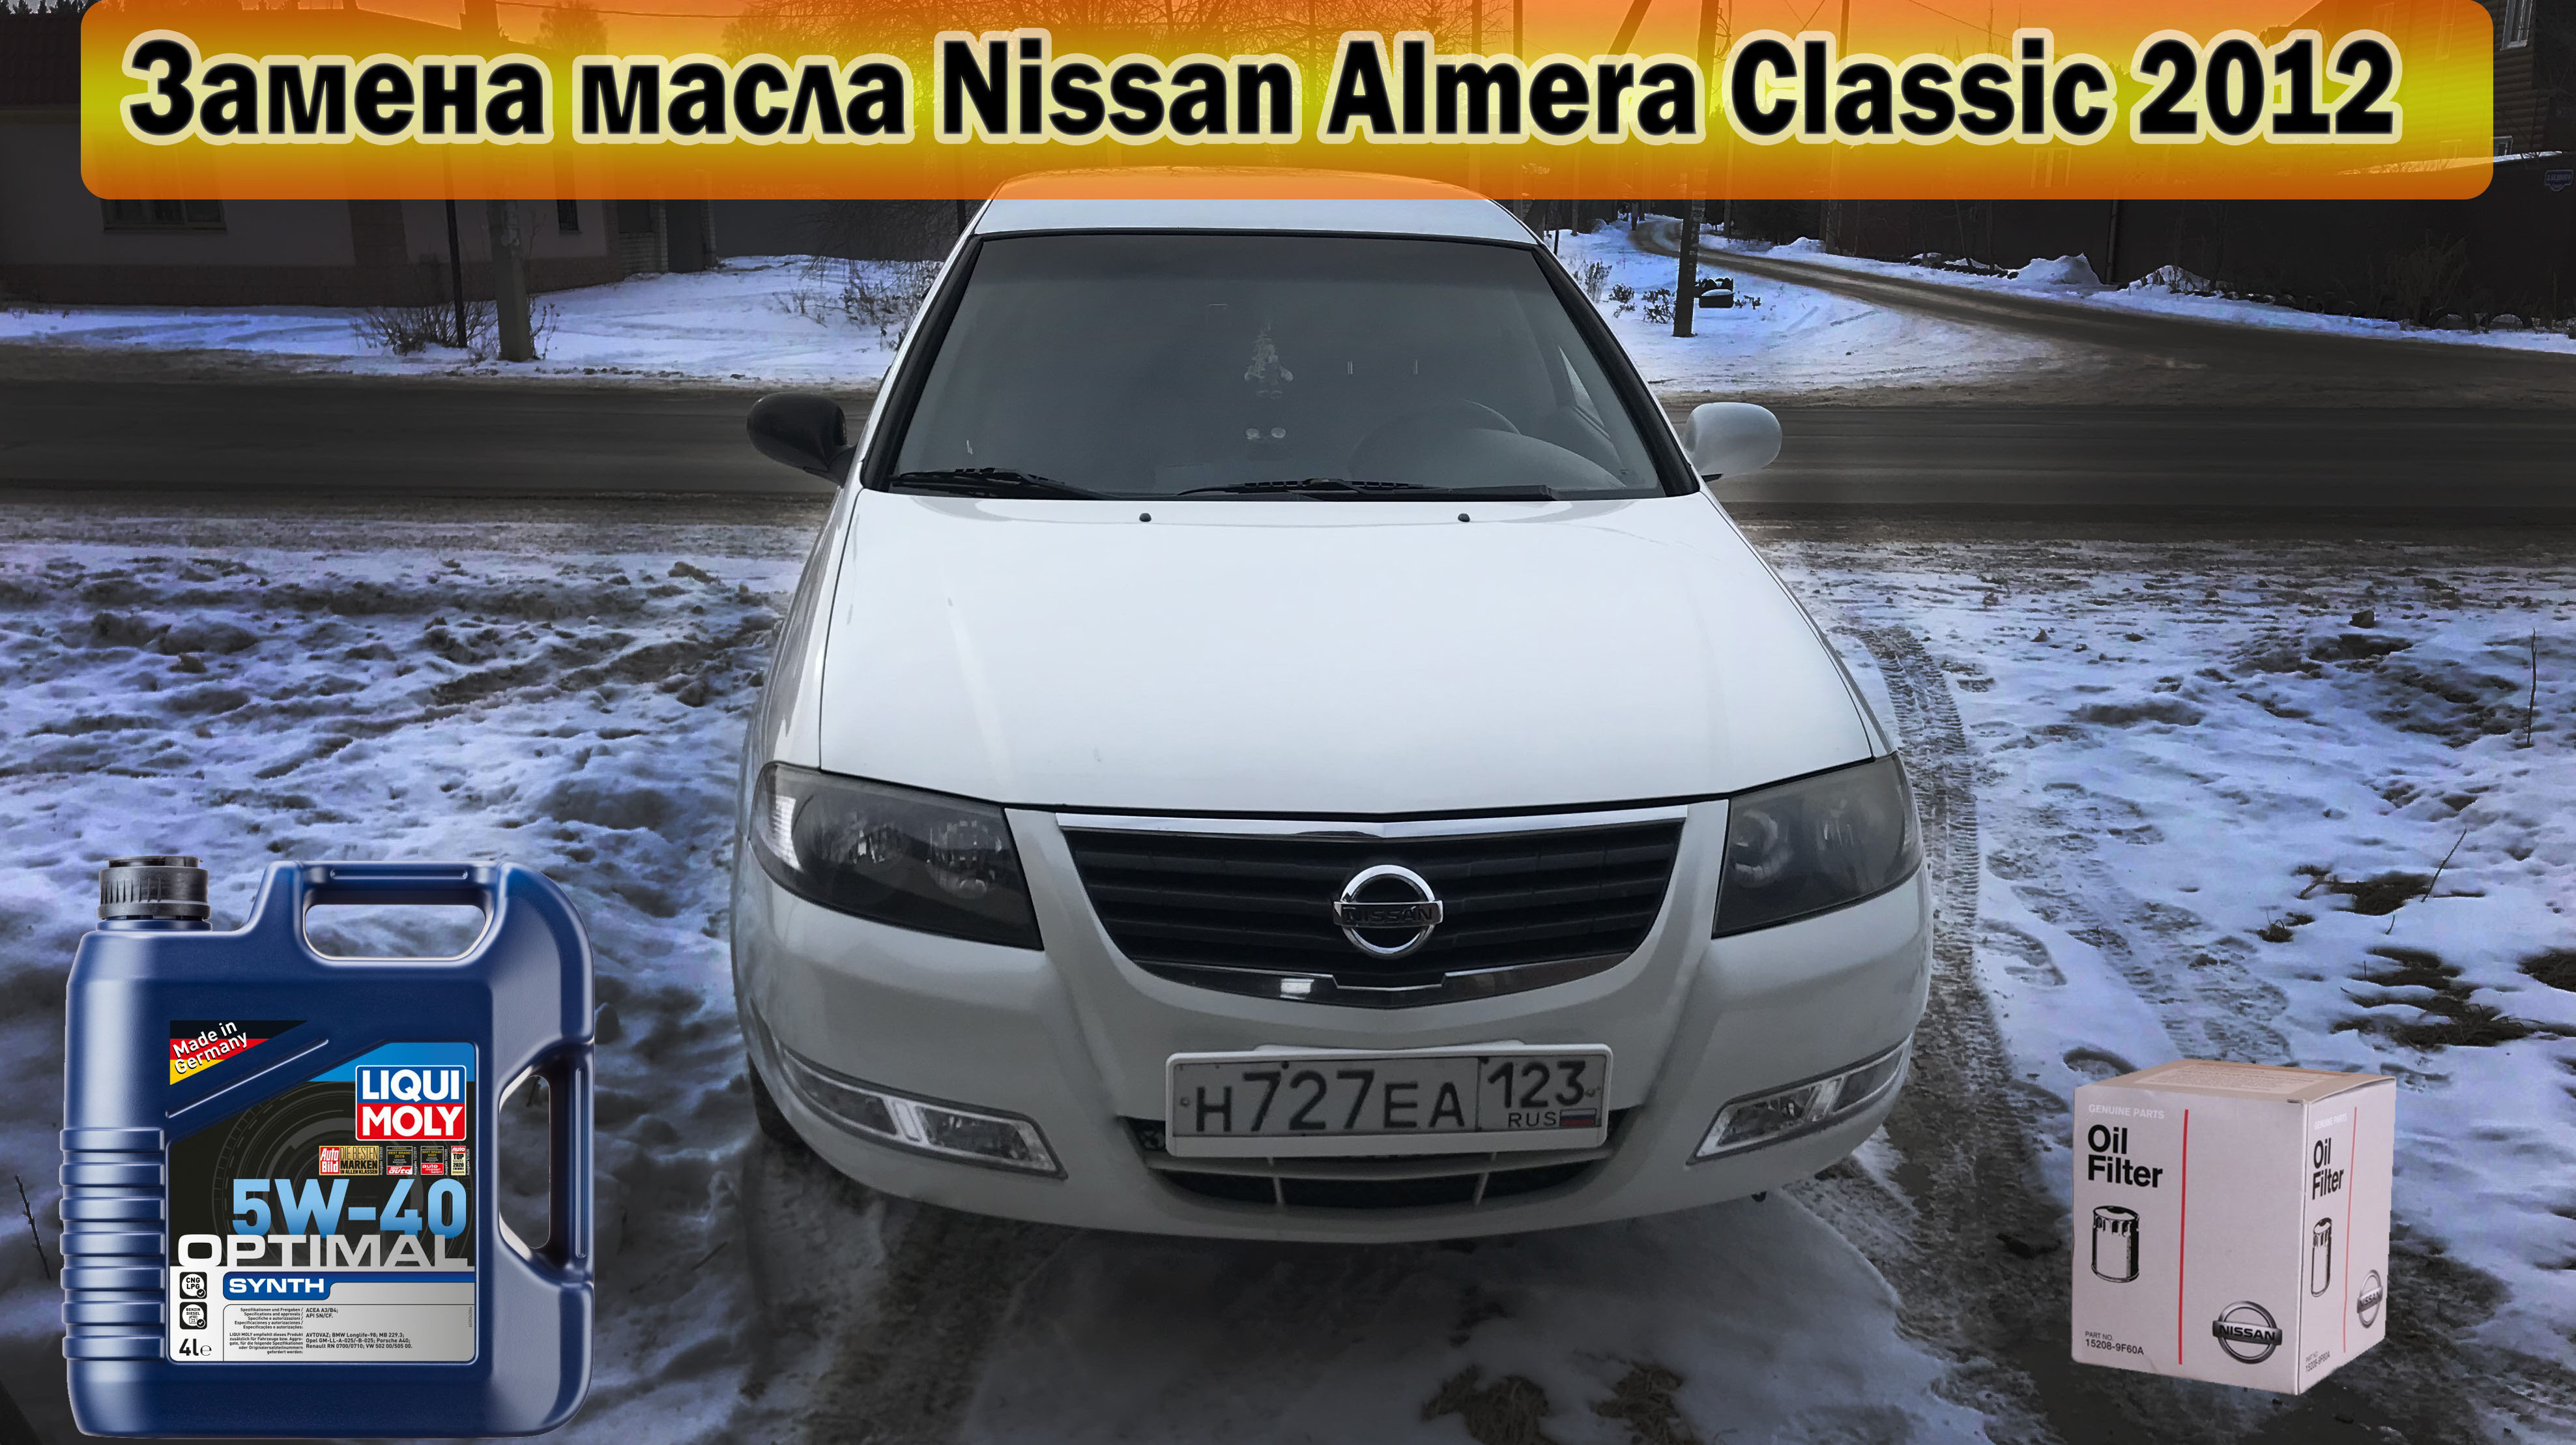 Замена масла в двигателе и фильтров Nissan Almera Classic 2012